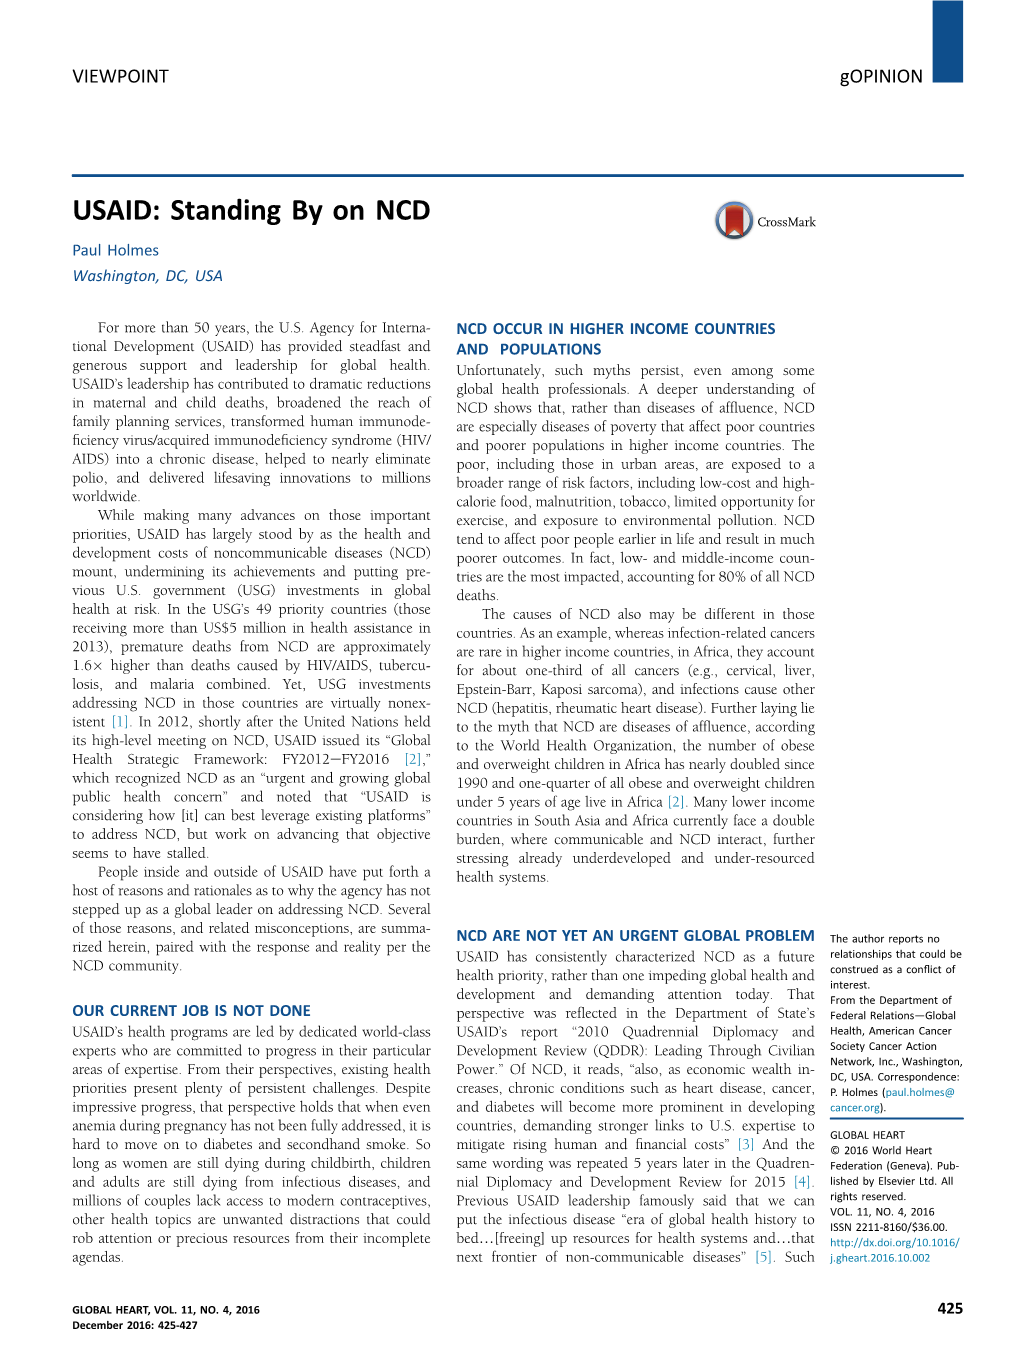 USAID: Standing by on NCD Paul Holmes Washington, DC, USA